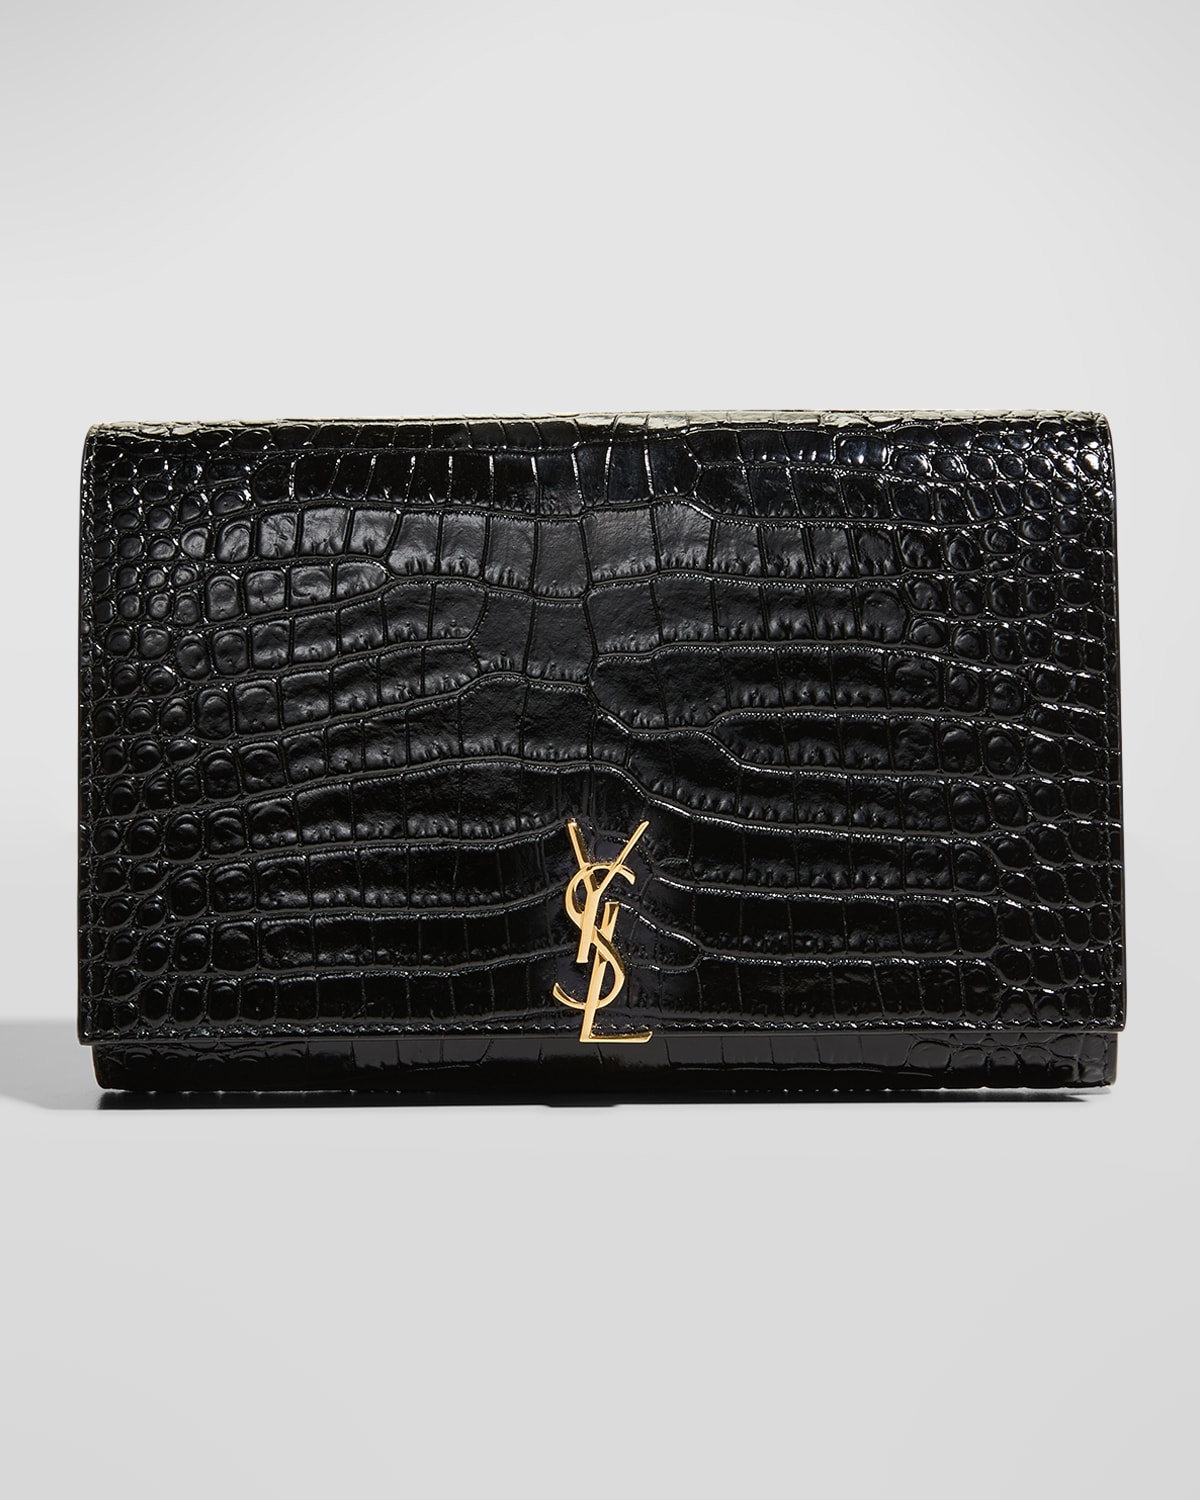 Saint Laurent Ysl Croc-Embossed Leather Wallet on Chain